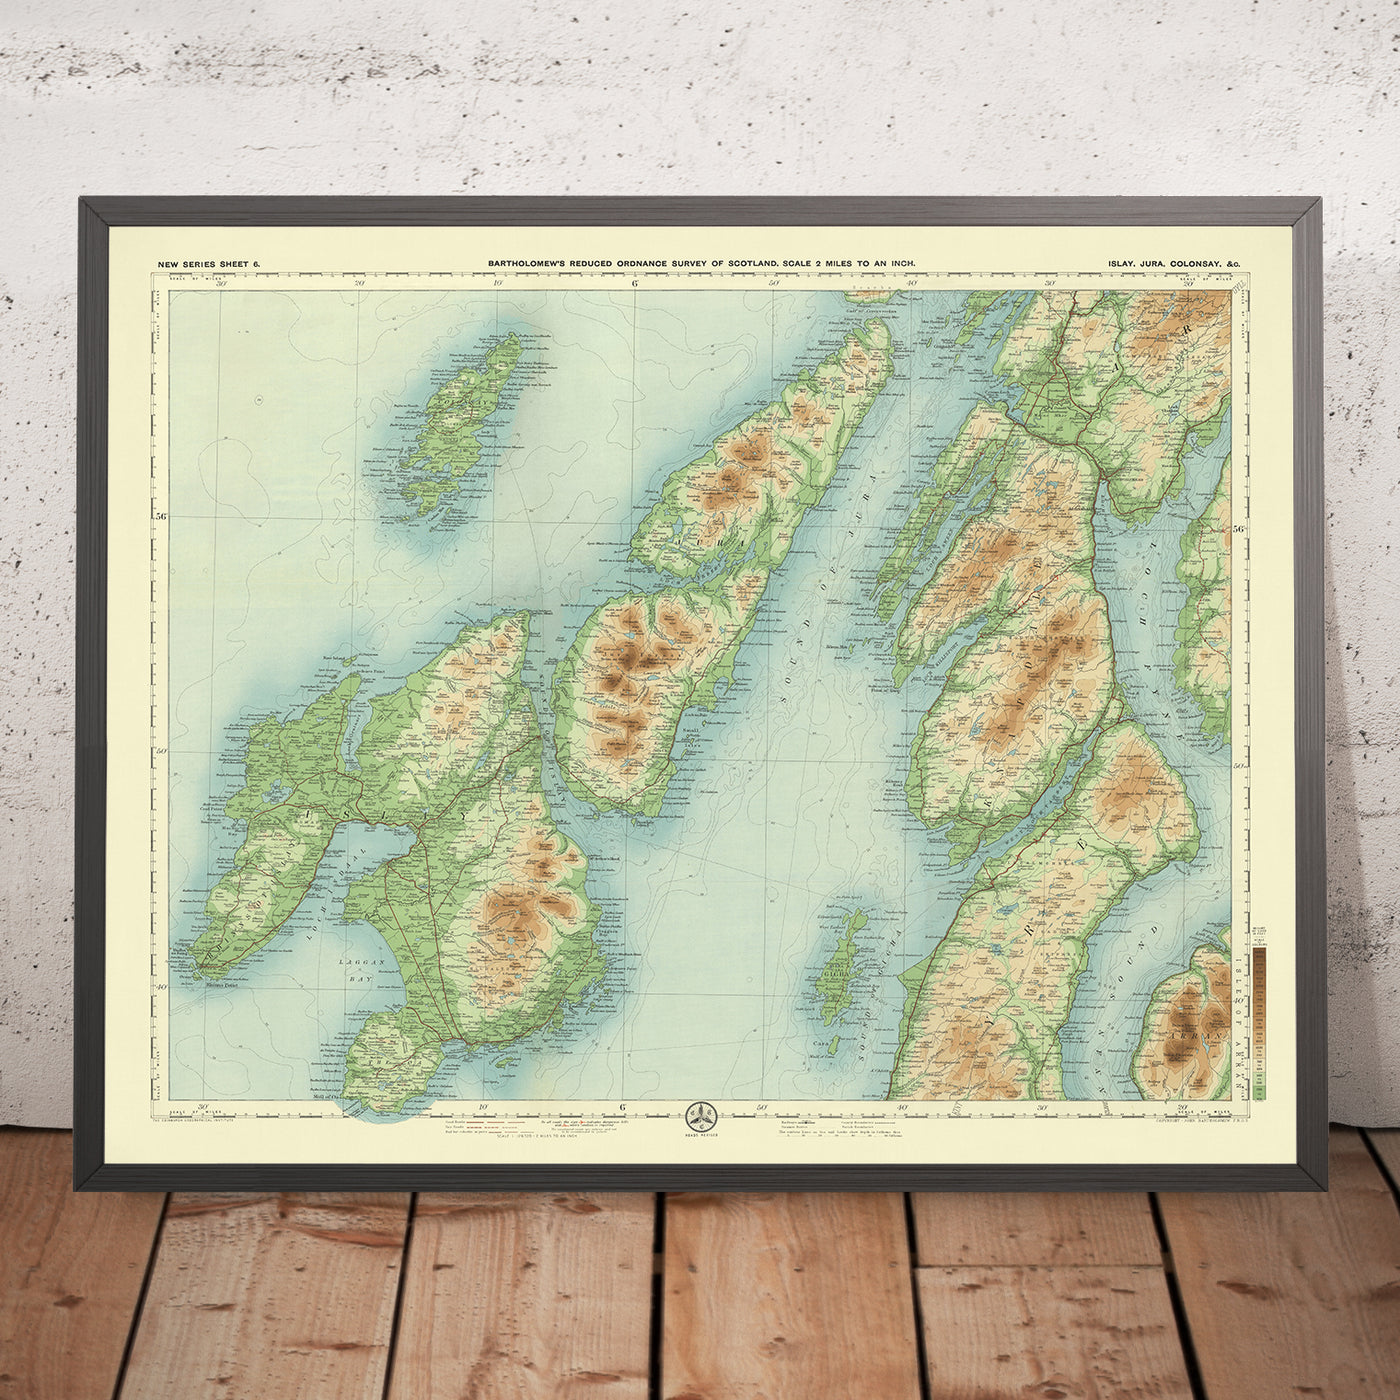 Old OS Map of Islay, Jura & Colonsay by Bartholomew, 1901: Bowmore, Paps of Jura, Argyll, Sound of Islay, Loch Indaal, Gruinart & Finlaggan